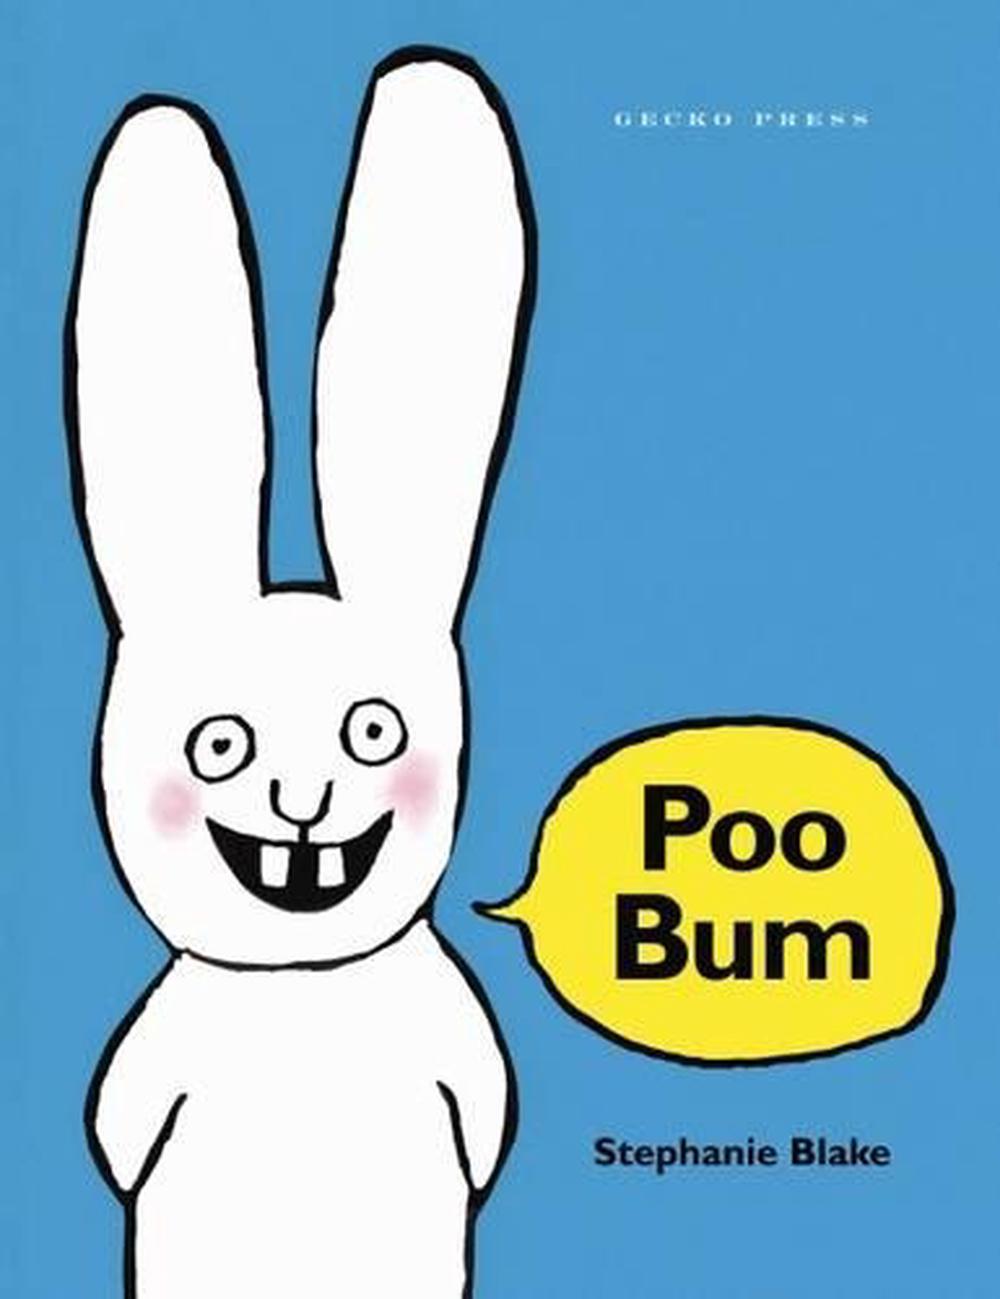 Poo Bum by Stéphanie Blake